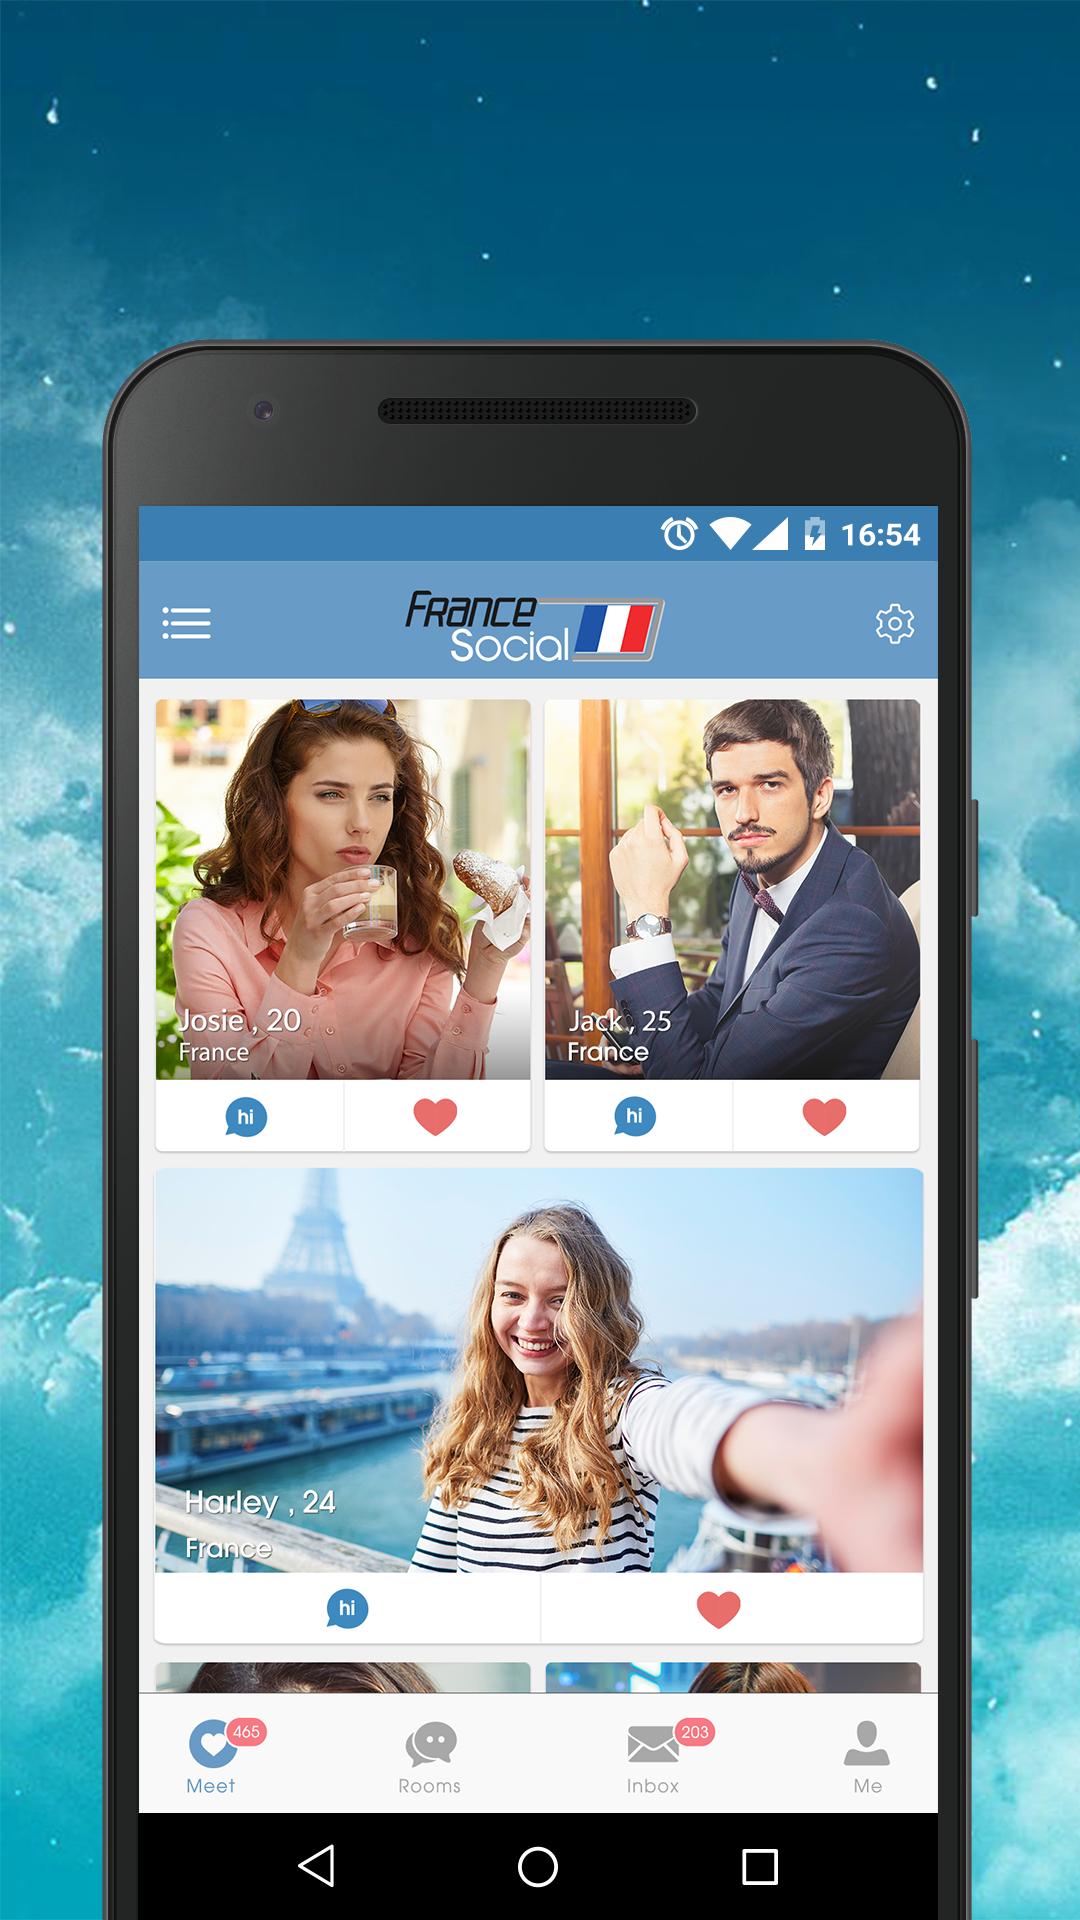 lerogolflin: French dating websites